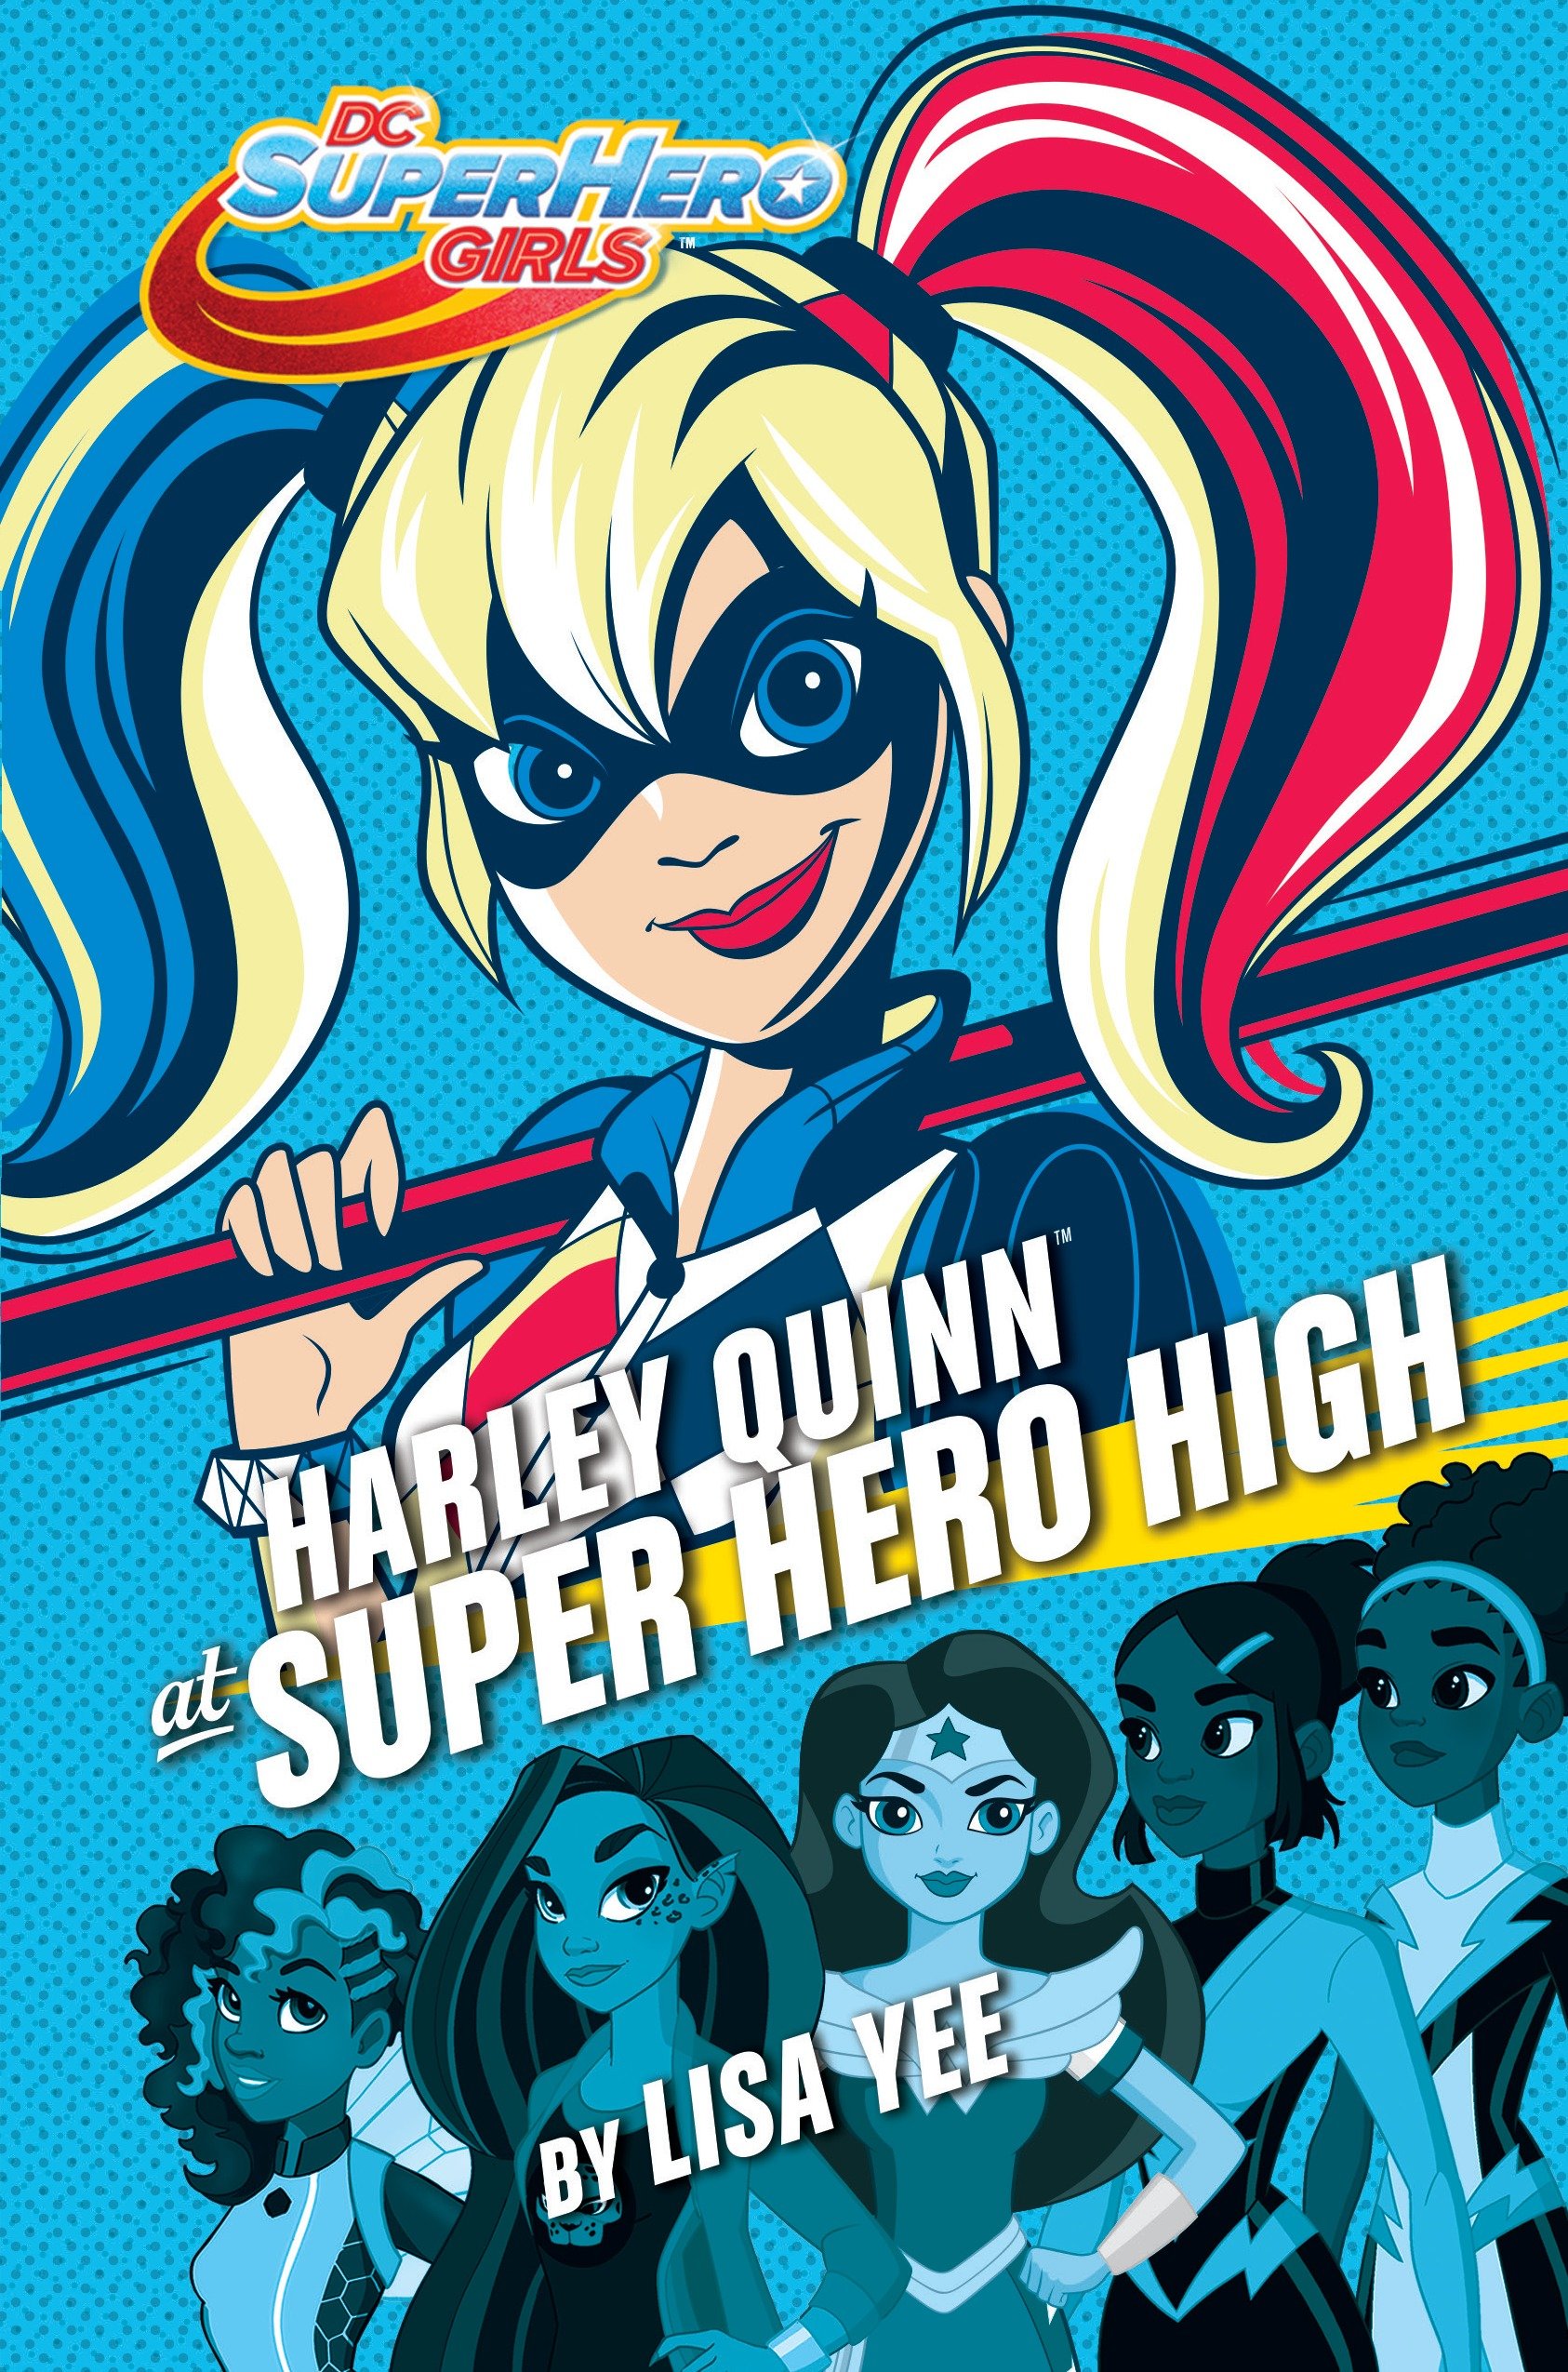 Harley Quinn at Super Hero High cover image